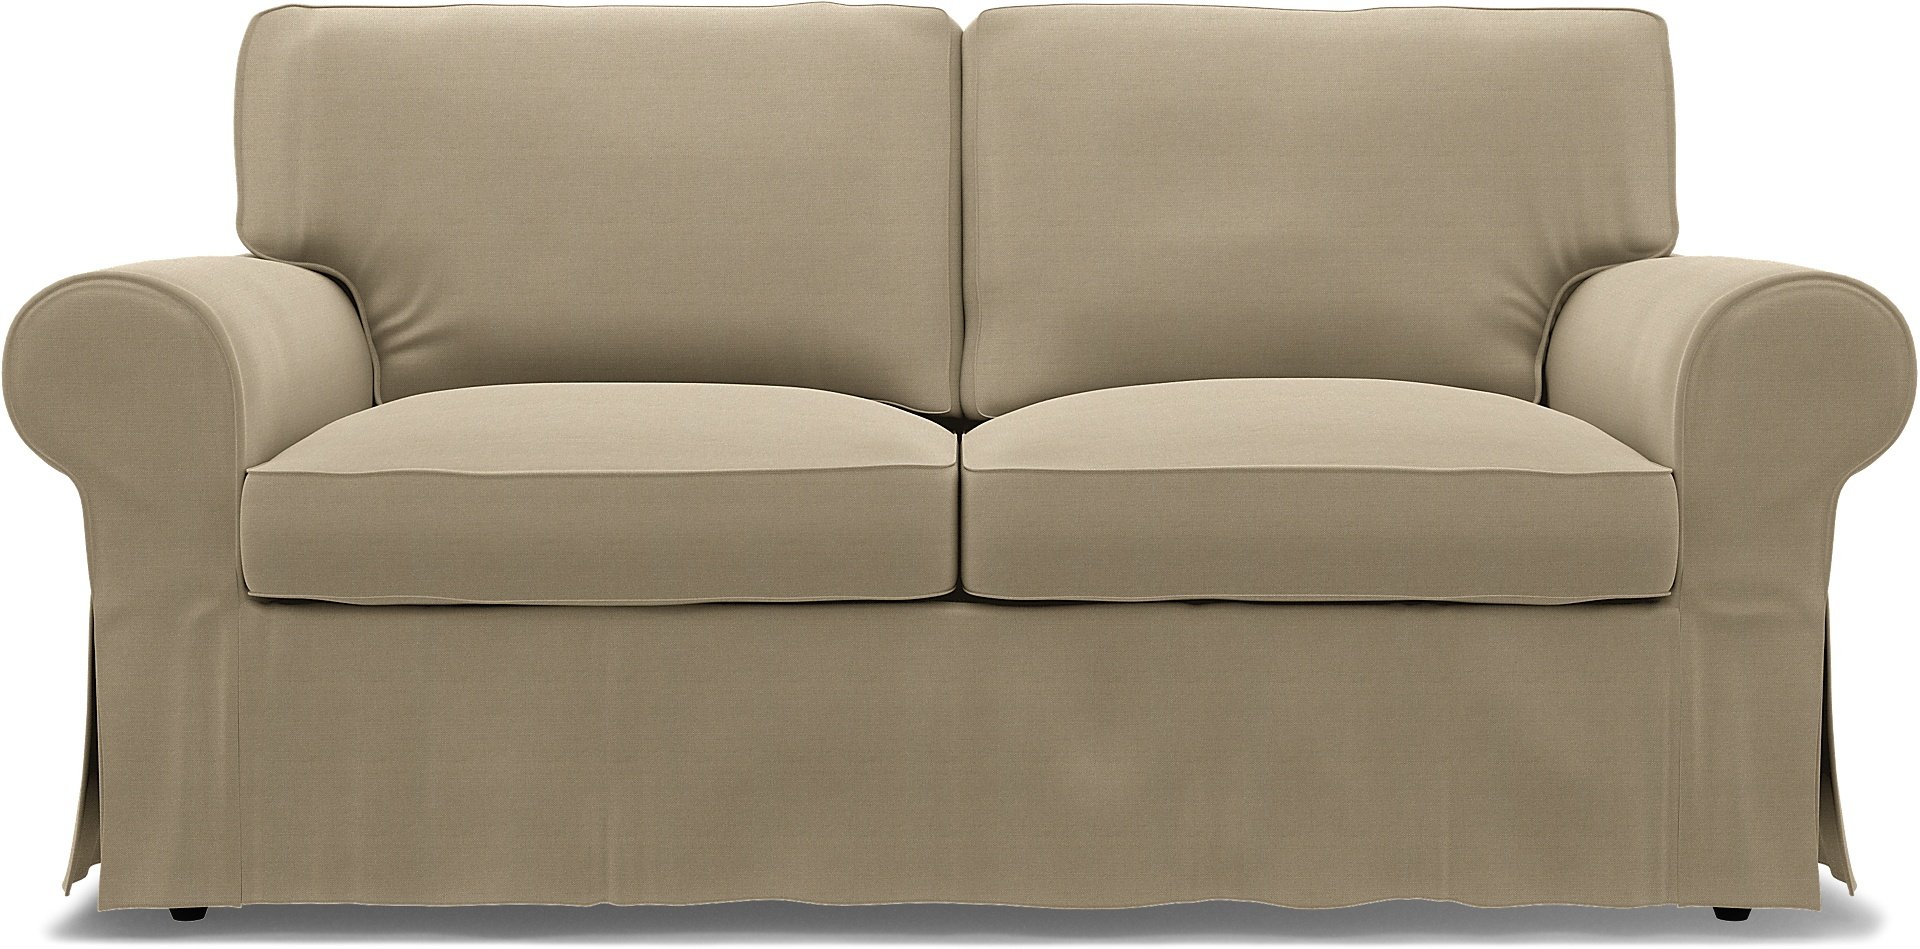 IKEA - Ektorp 2 Seater Sofa Bed Cover, Tan, Linen - Bemz